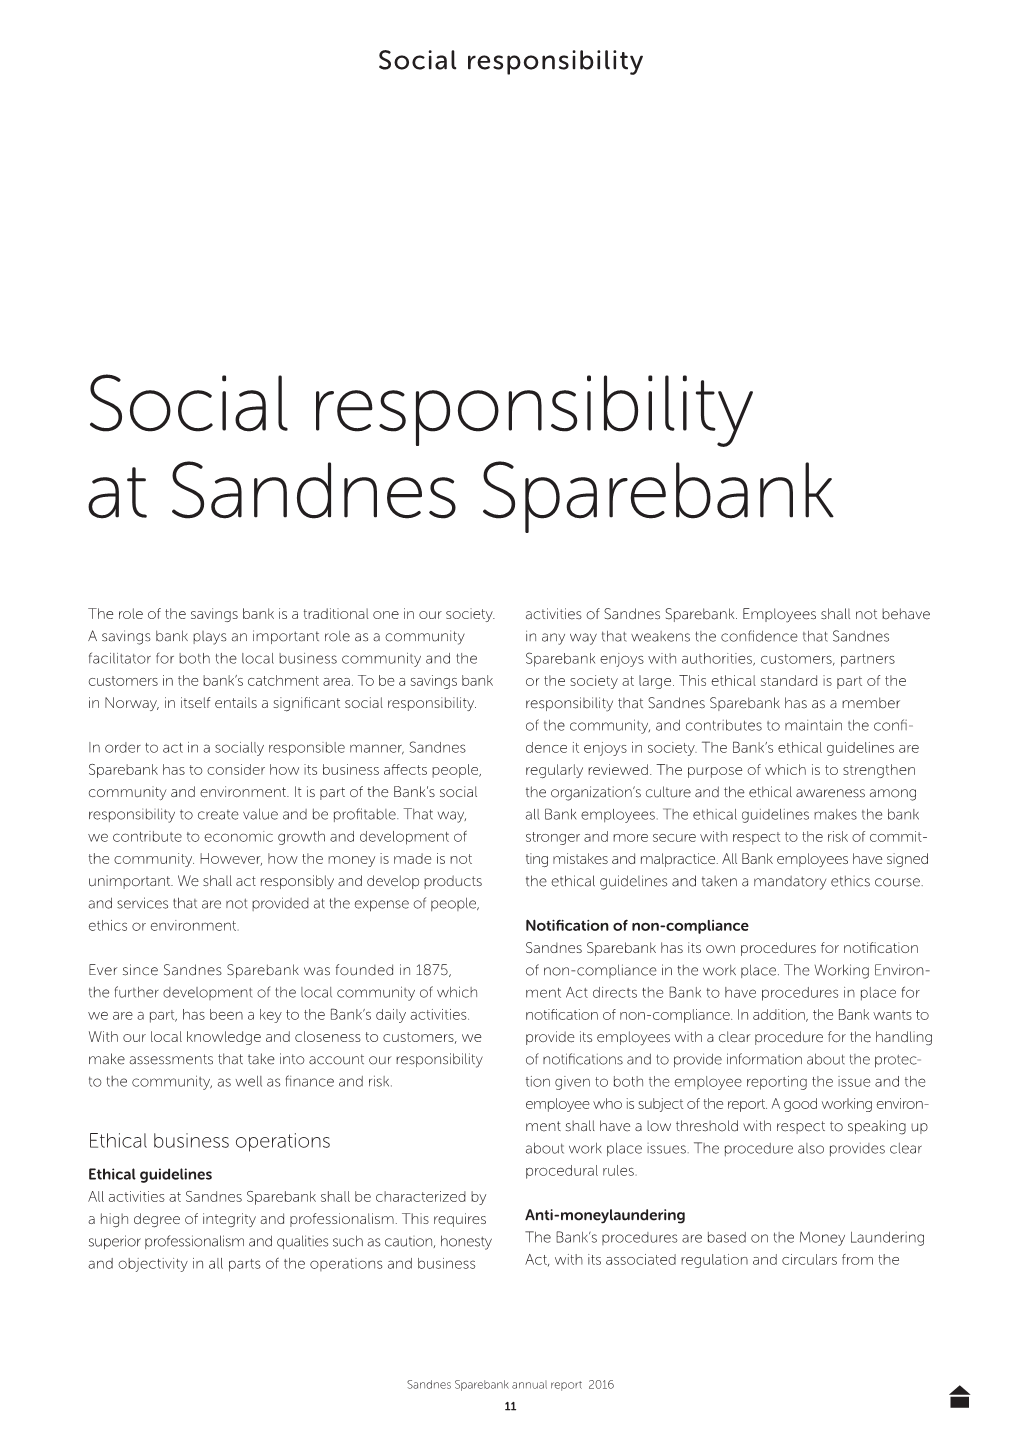 Social Responsibility at Sandnes Sparebank